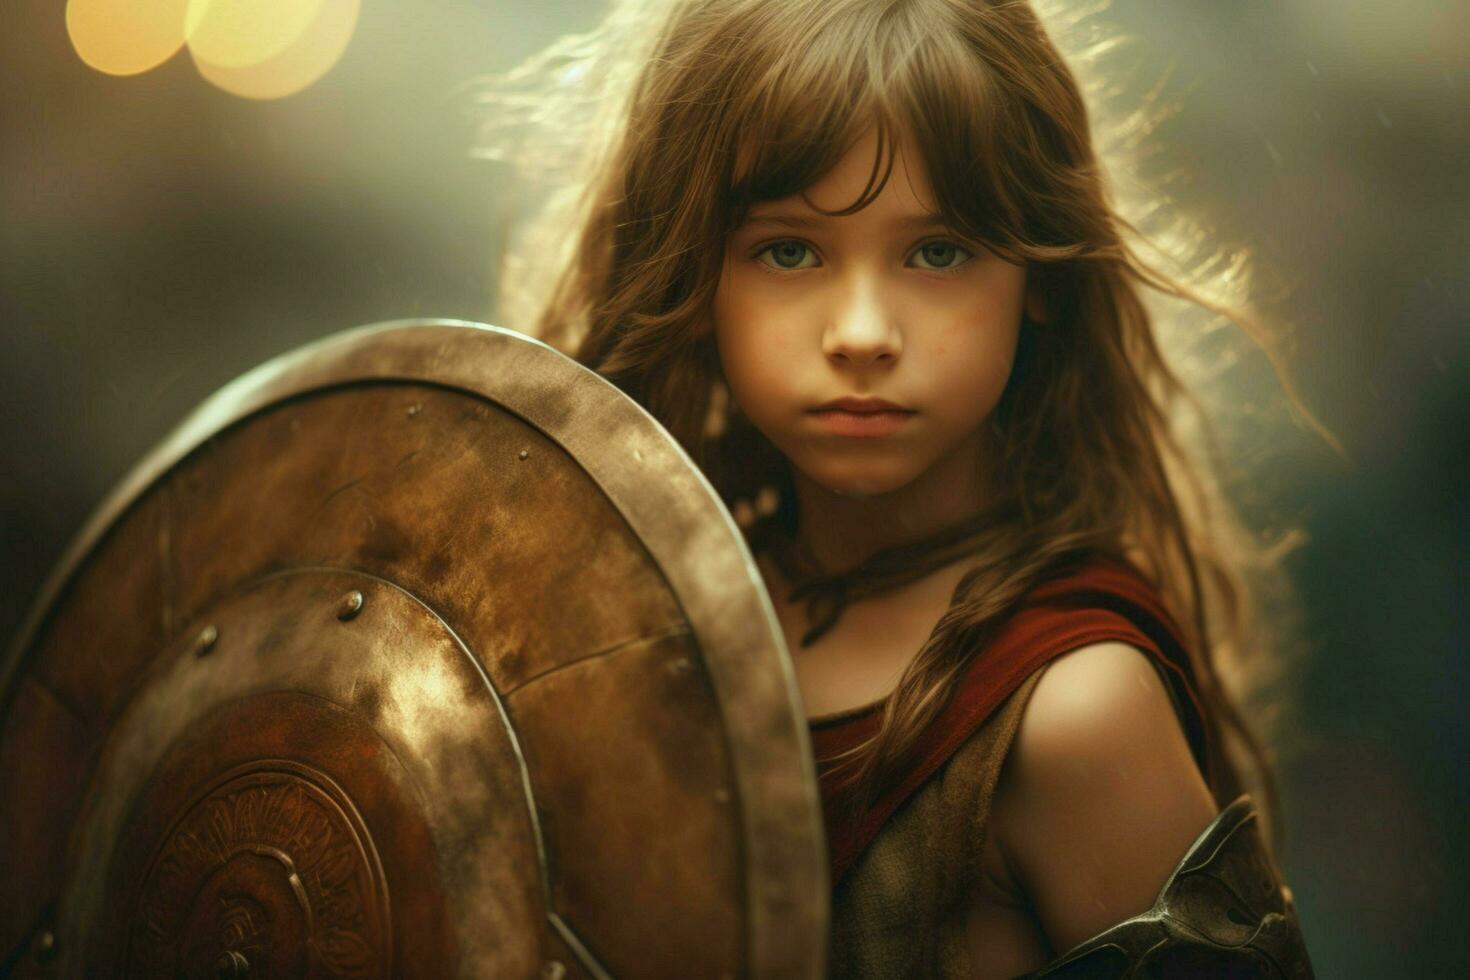 warrior child girl shield gaming fictional world photo